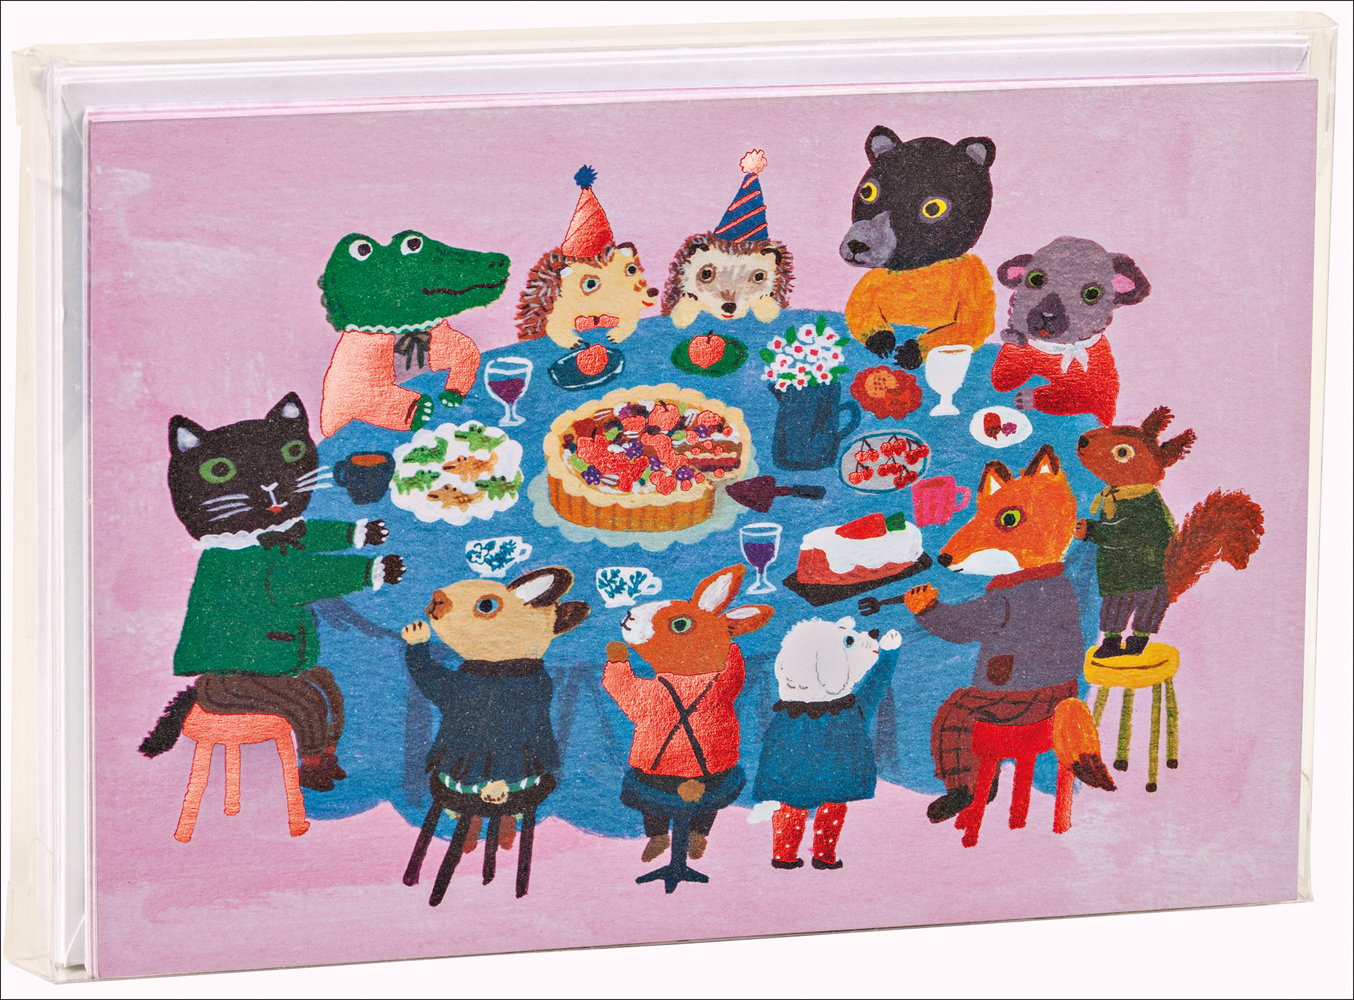 Yumi Kitagishi's sweet illustration of animal teaparty, on notecard, by teNeues stationery.